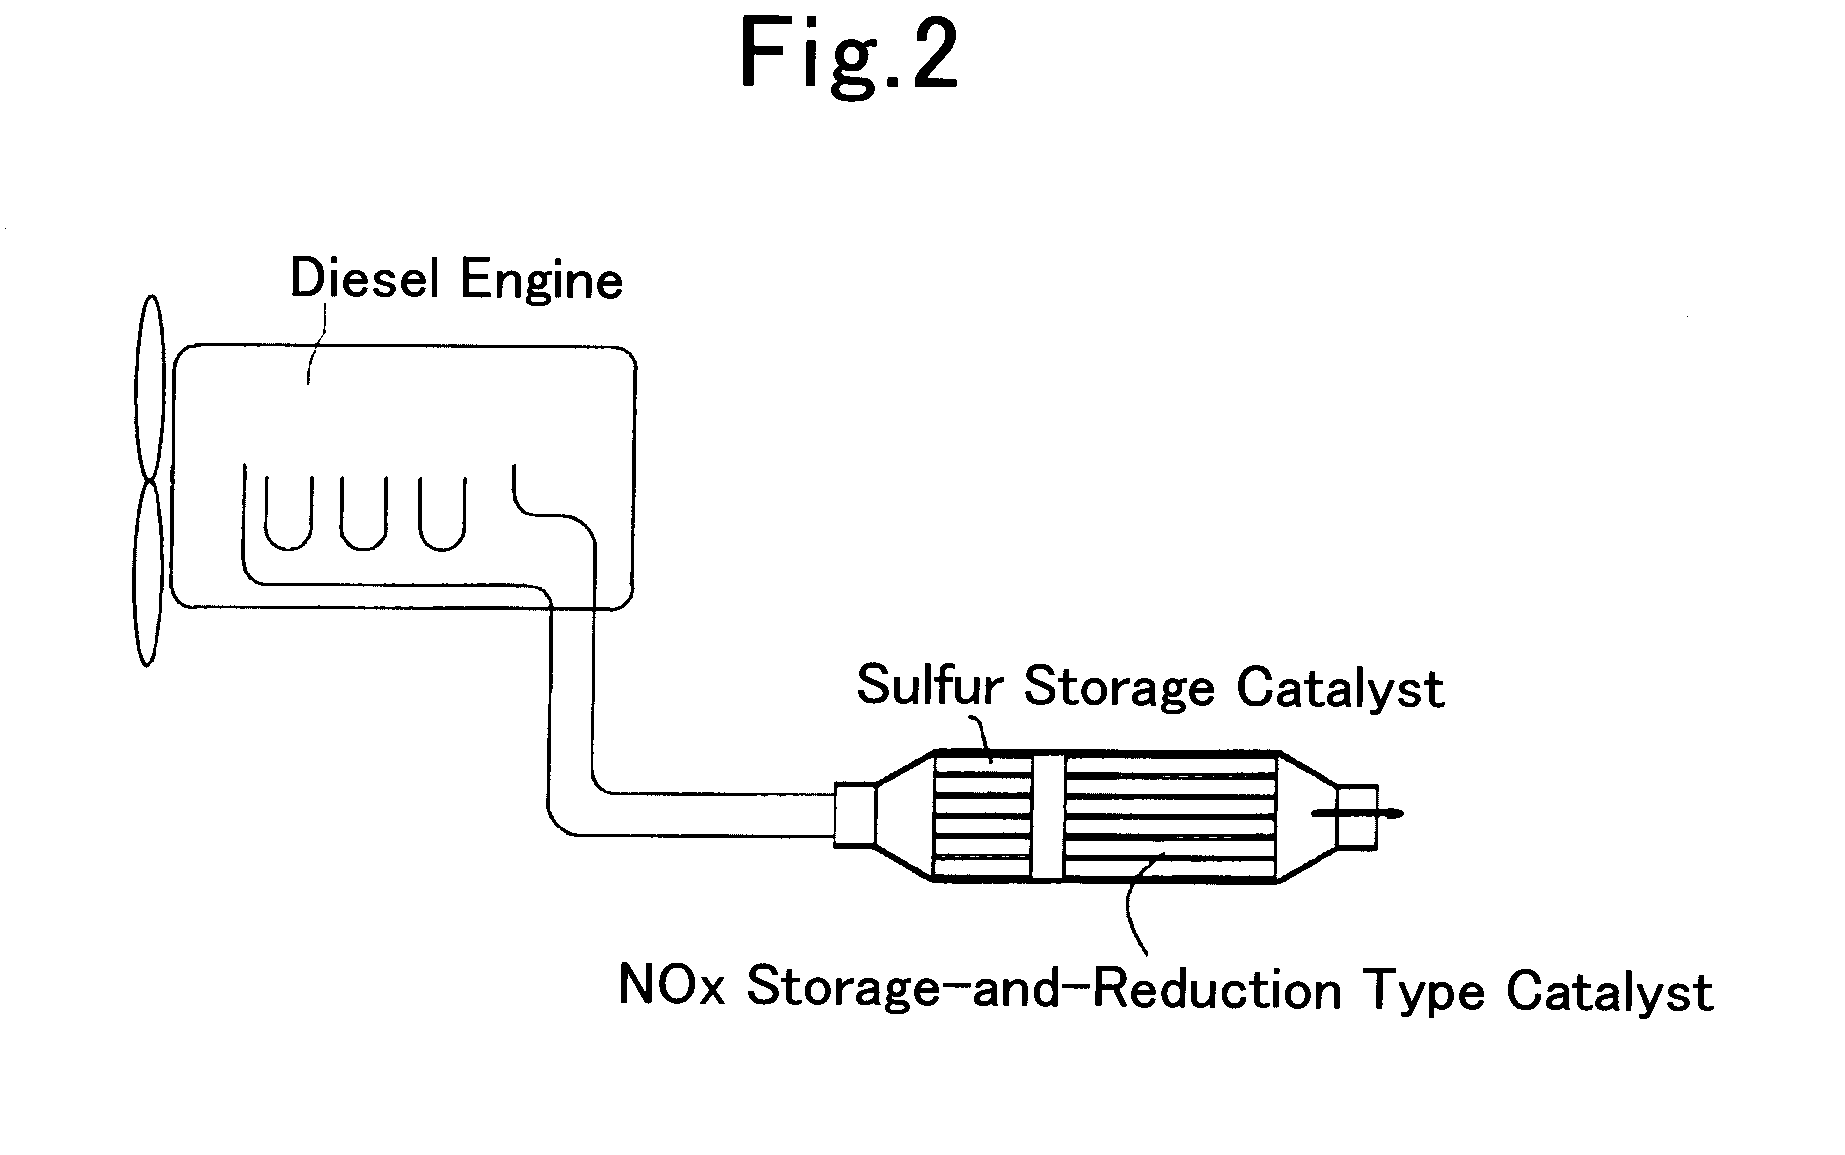 Sulfur storage catalyst